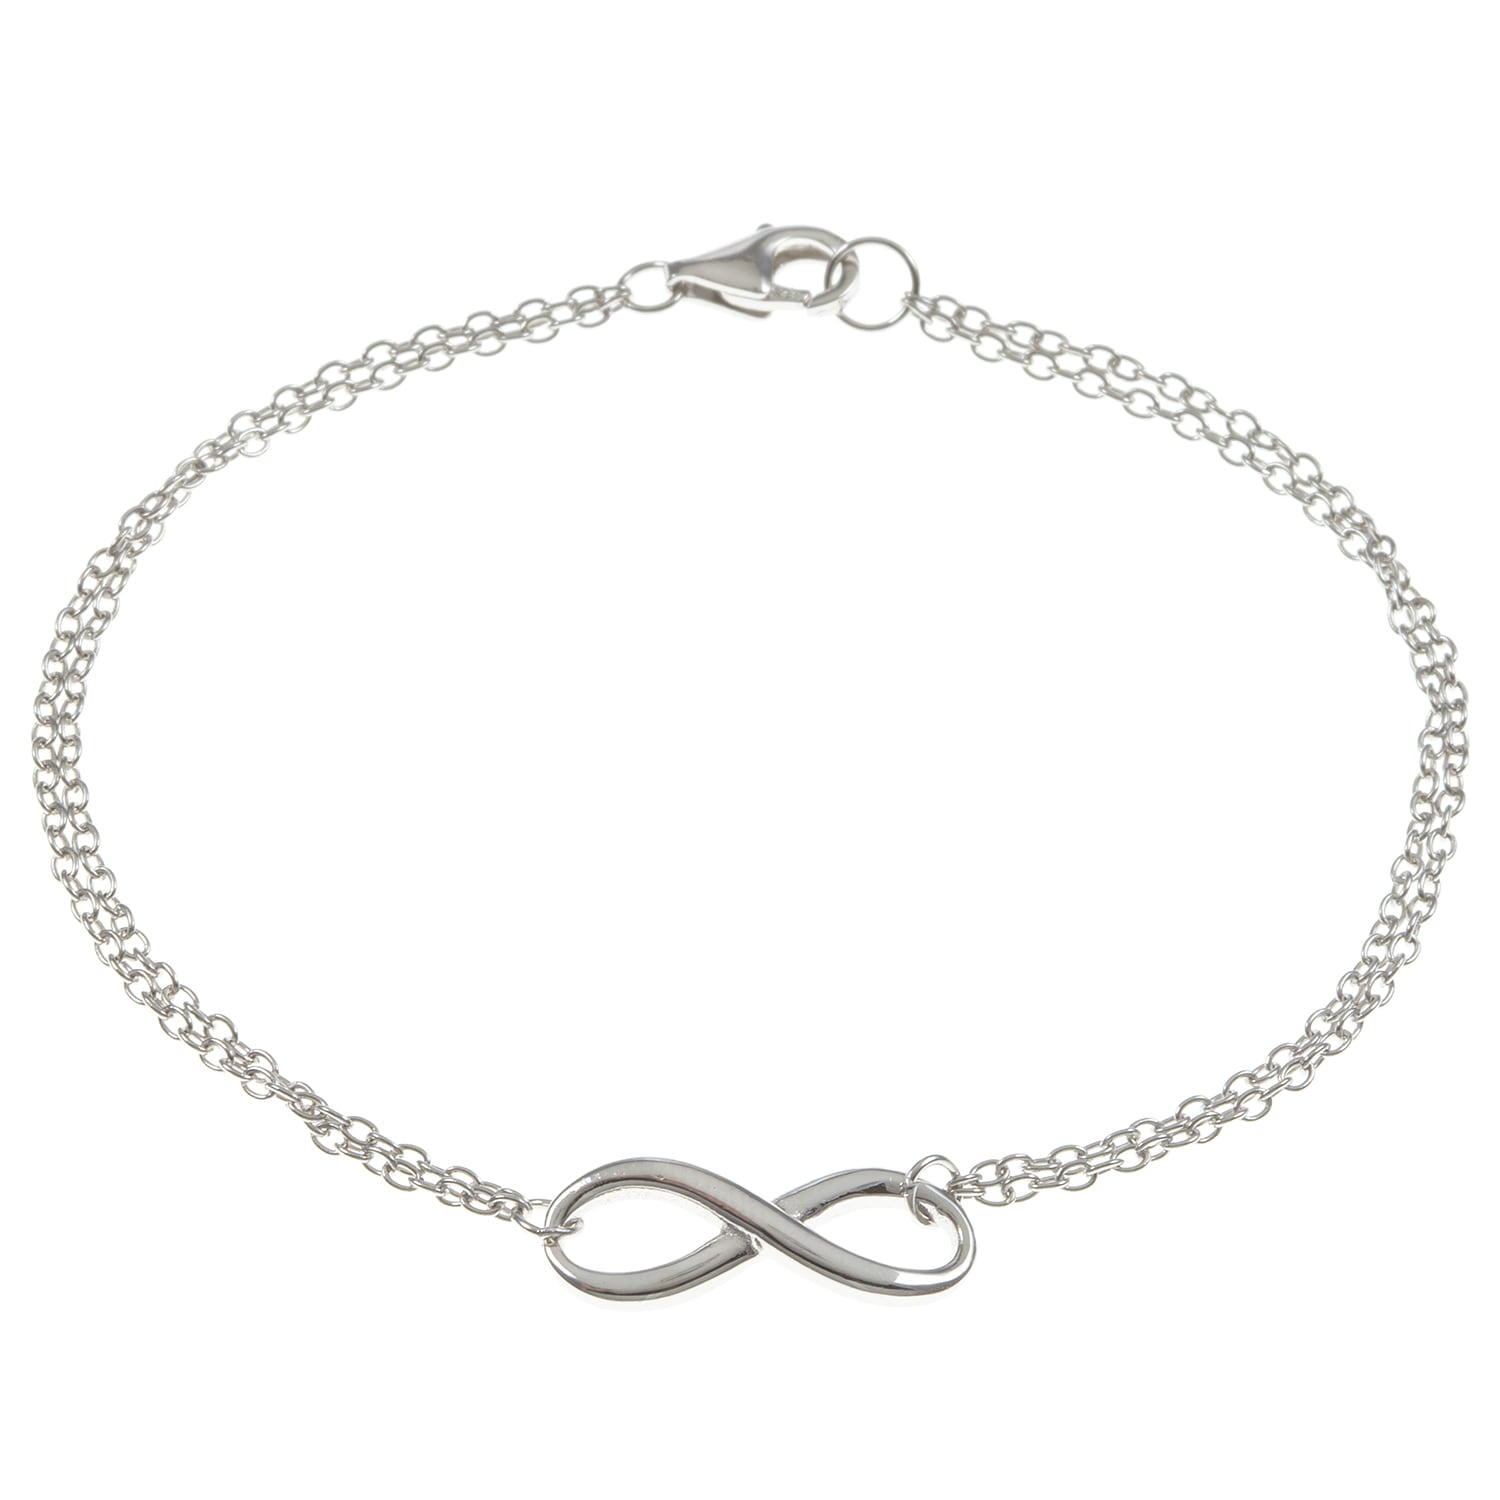 8 Silvertone Pair of Dice Faith Infinity Toggle Chain Bracelet